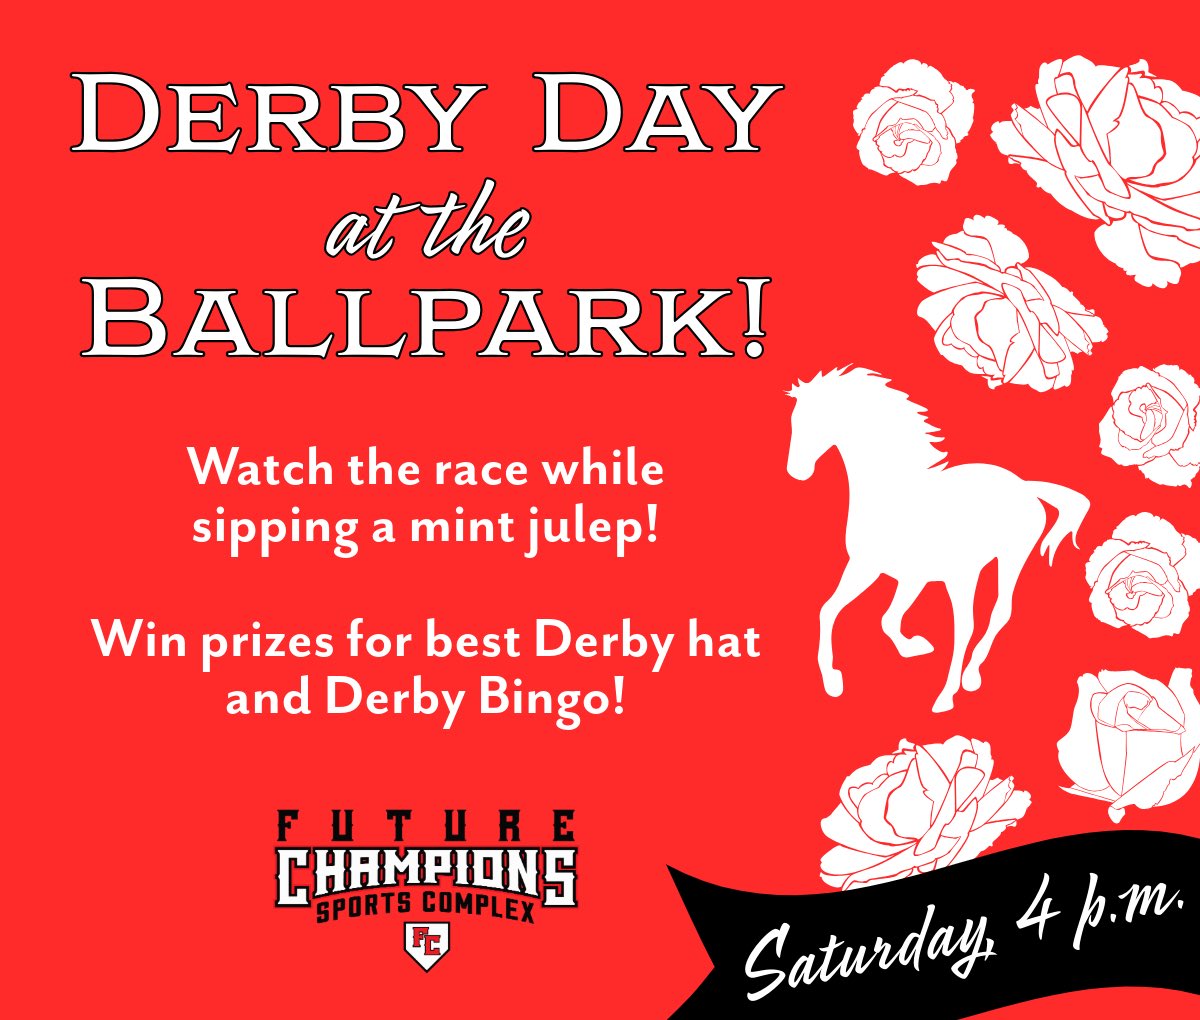 Join us for the Derby: mint juleps and prizes for Derby bingo and best Derby attire! ⚾️🐎🌹🏁👒⚾️ #FutureChampions #JacksonvilleIL #KentuckyDerby #mintjulep #derbydayattheballpark